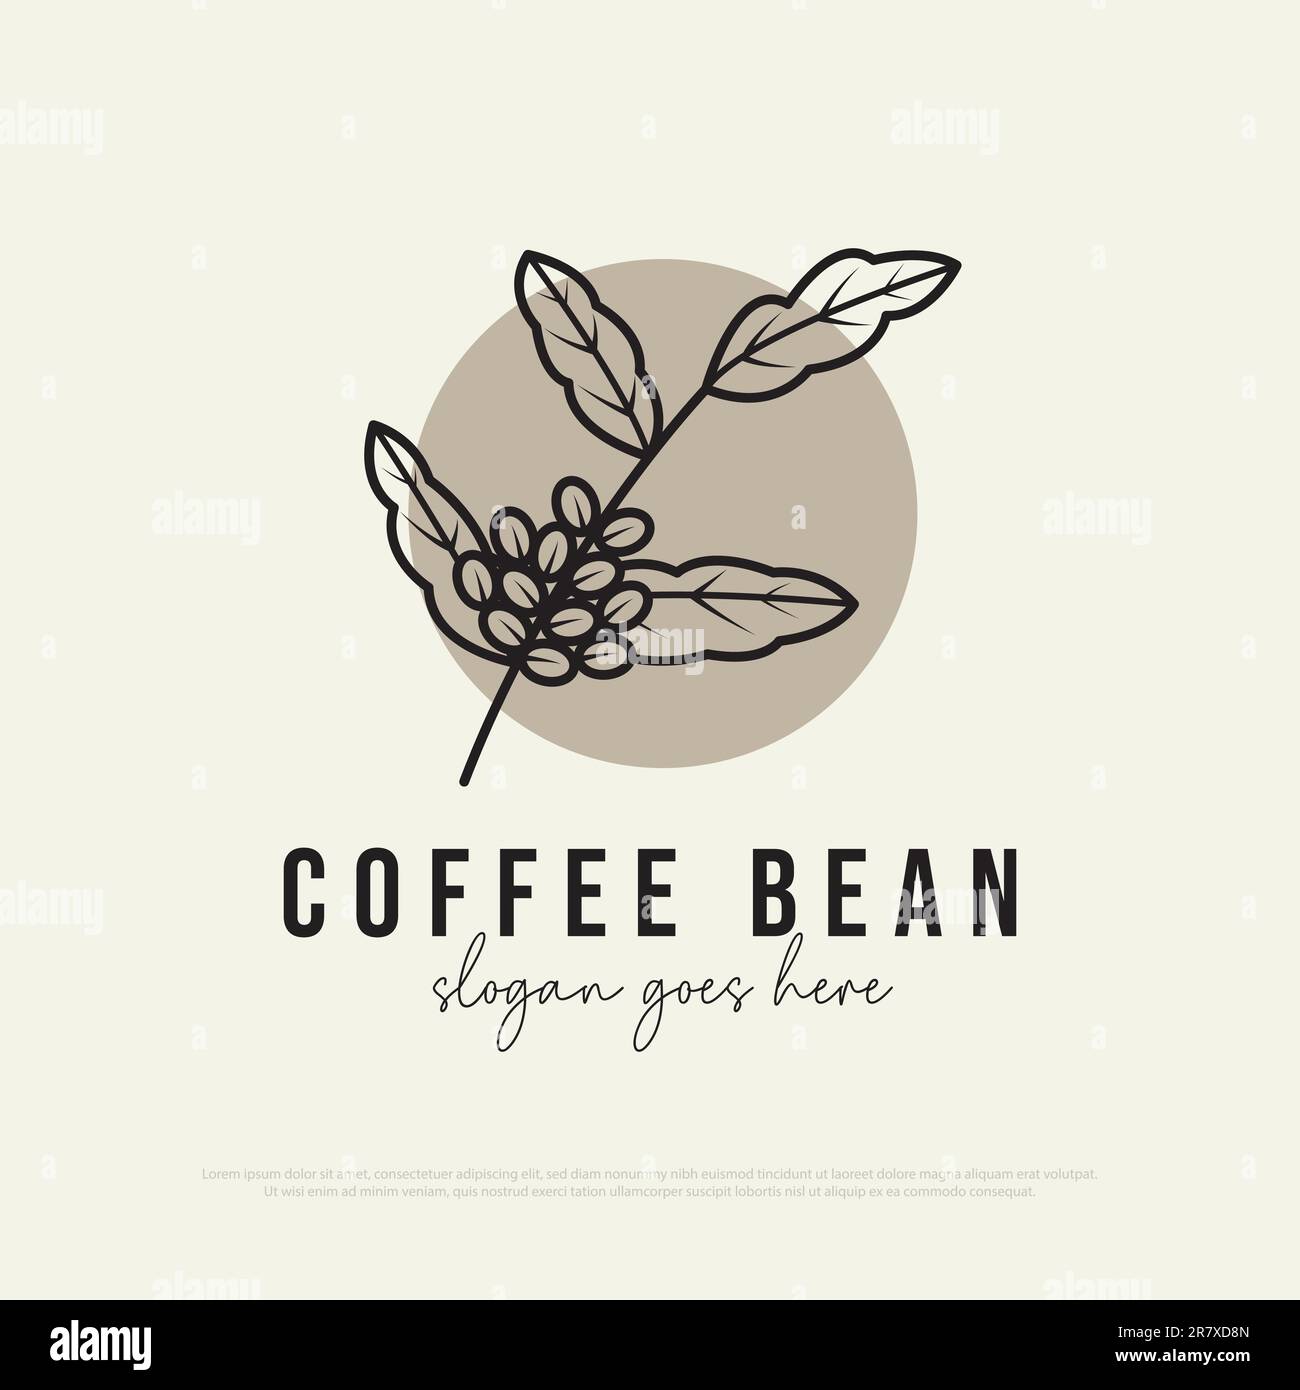 https://c8.alamy.com/comp/2R7XD8N/aesthetic-coffee-bean-logo-design-inspiration-best-for-cafe-restaurant-beverages-premium-vector-2R7XD8N.jpg